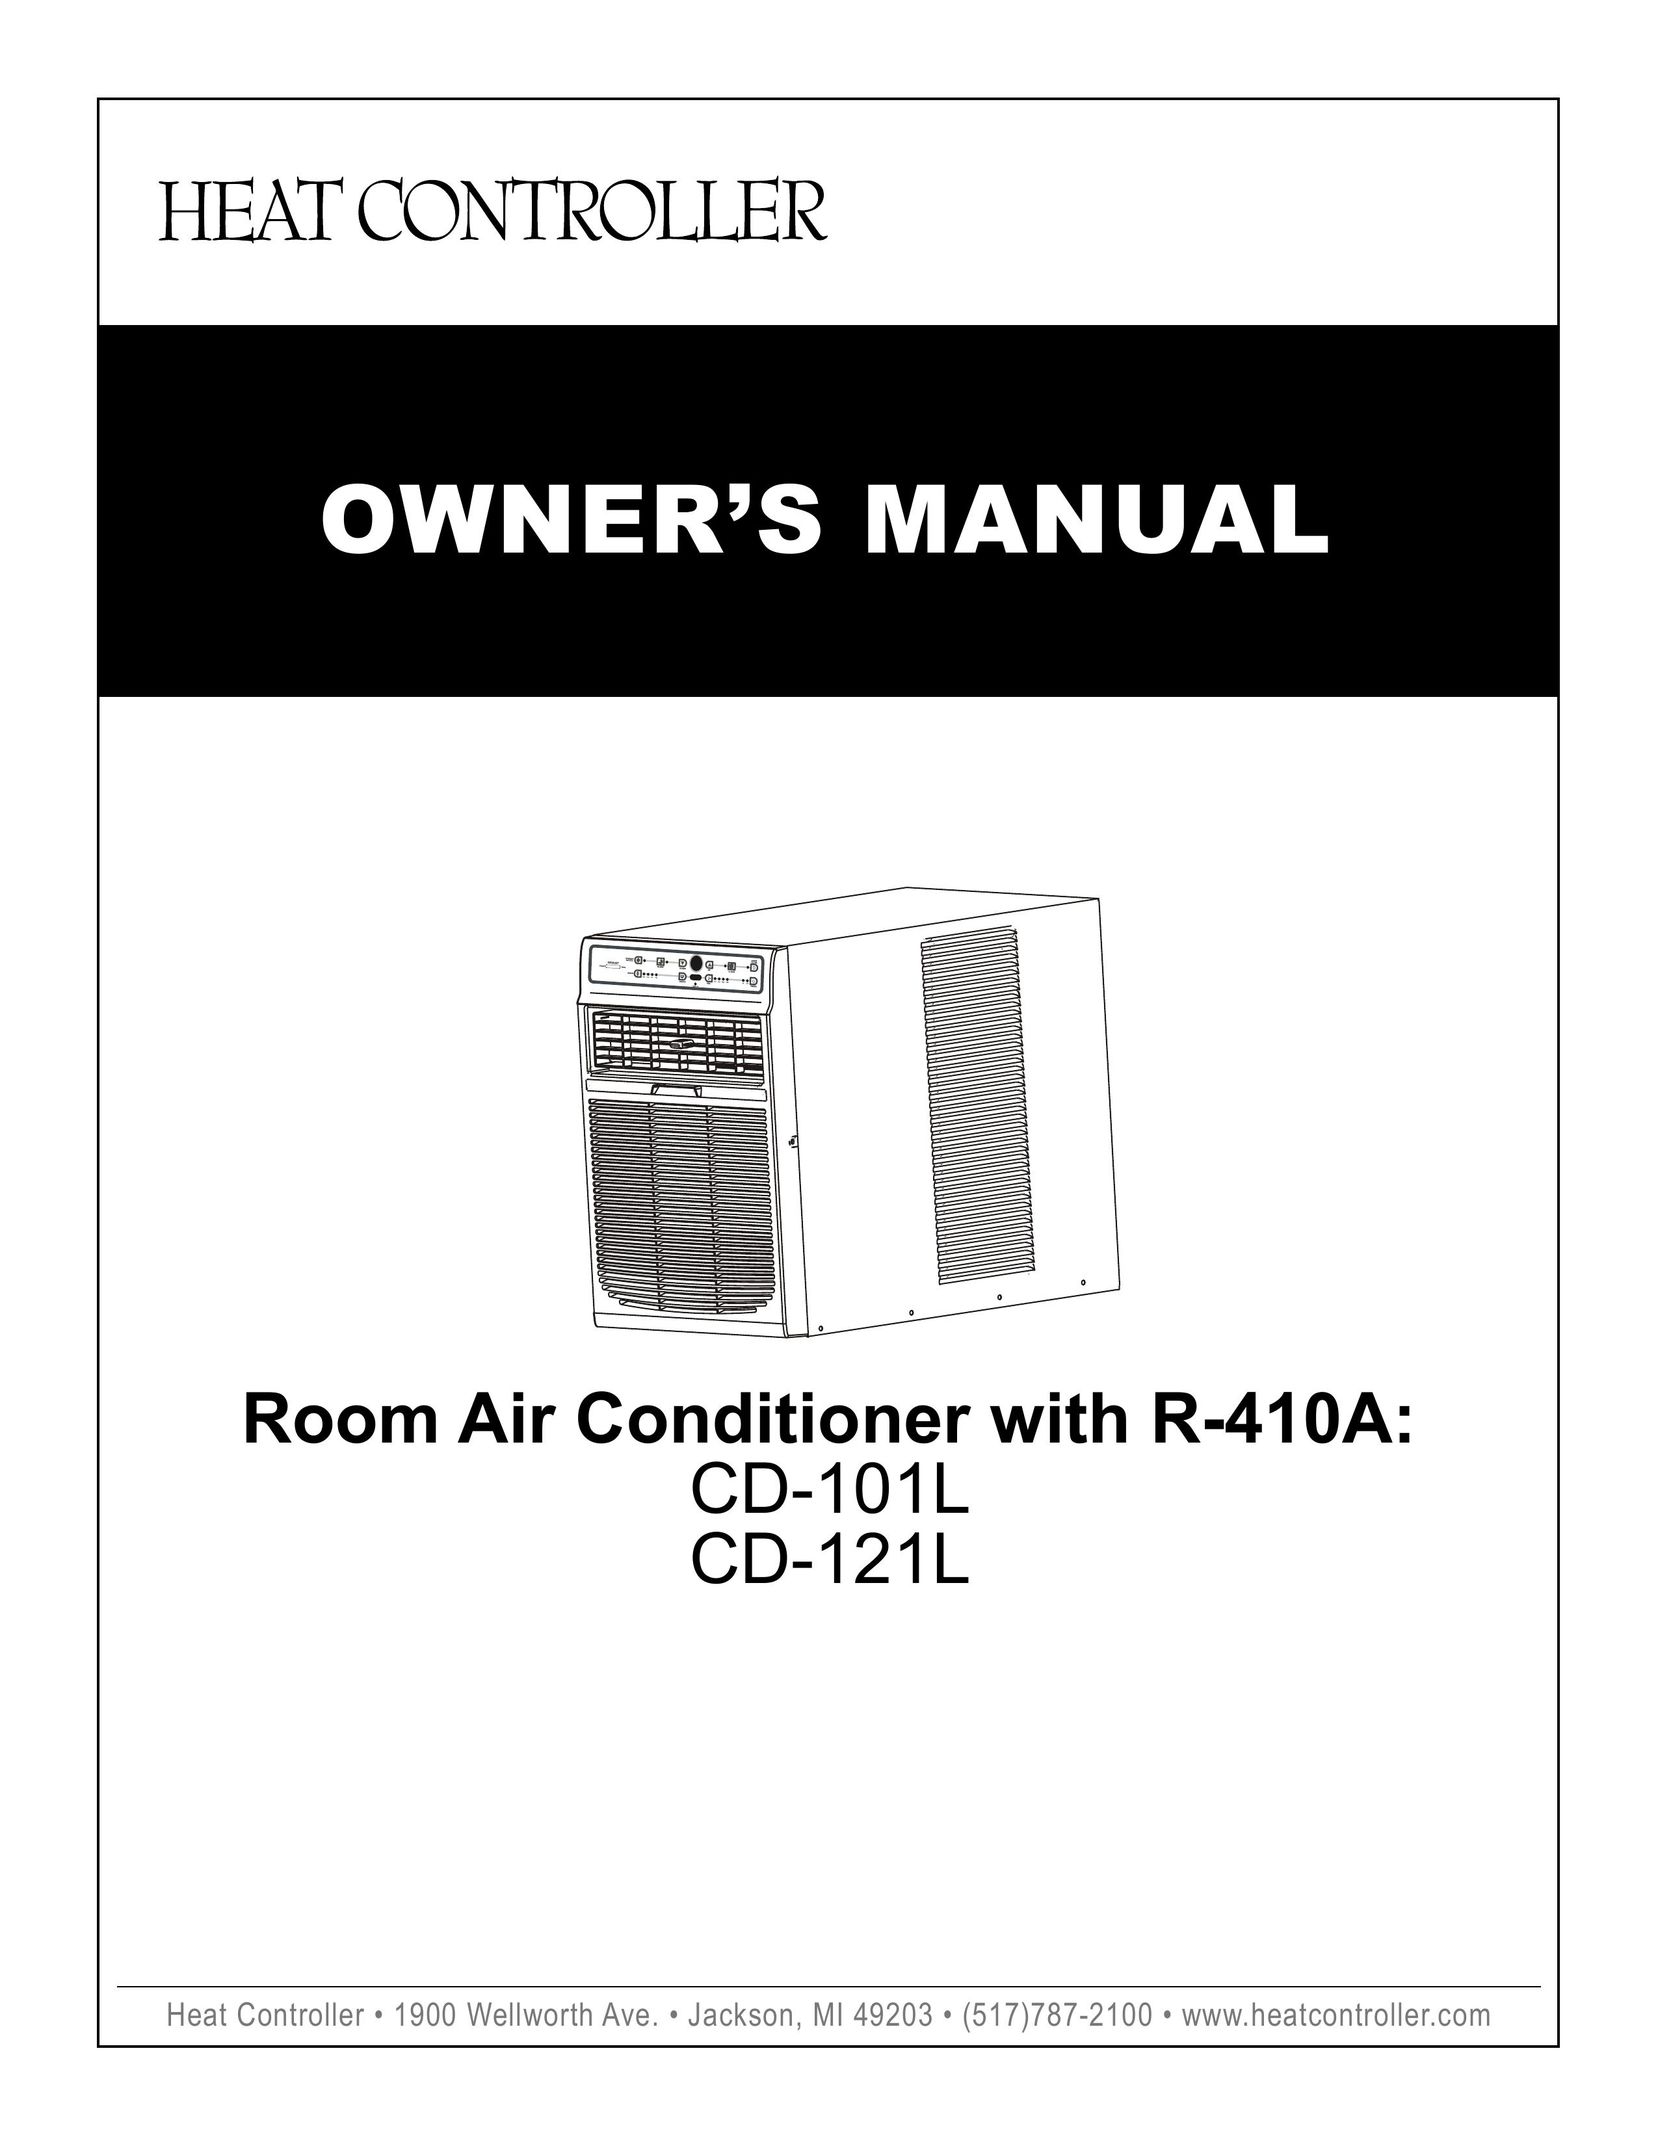 Heat Controller CD-101L Air Conditioner User Manual